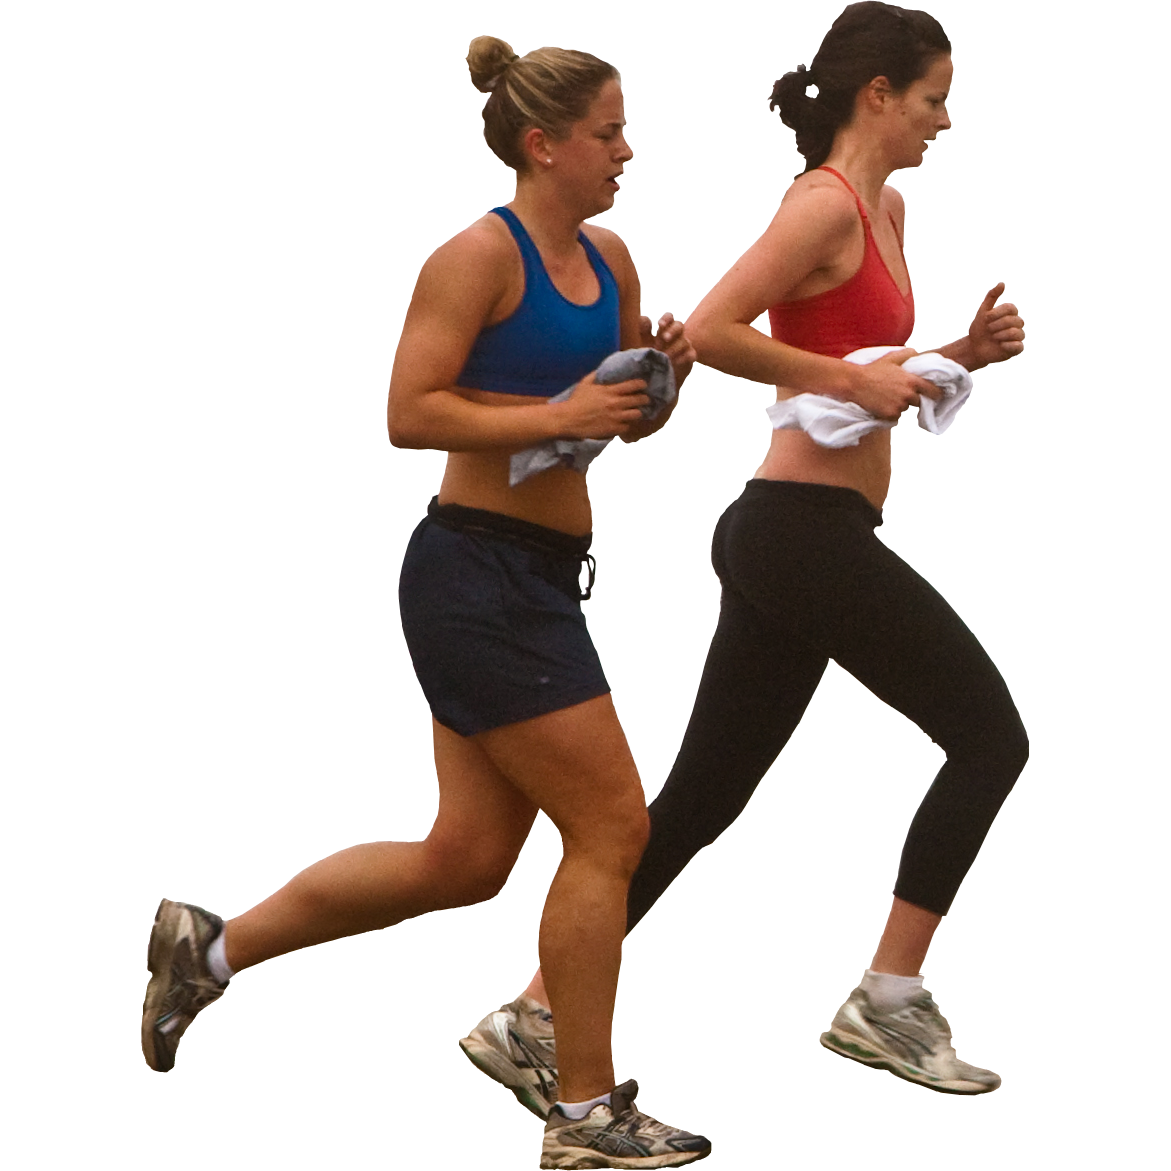 Person Athlete Jogging Free Download Image PNG Image